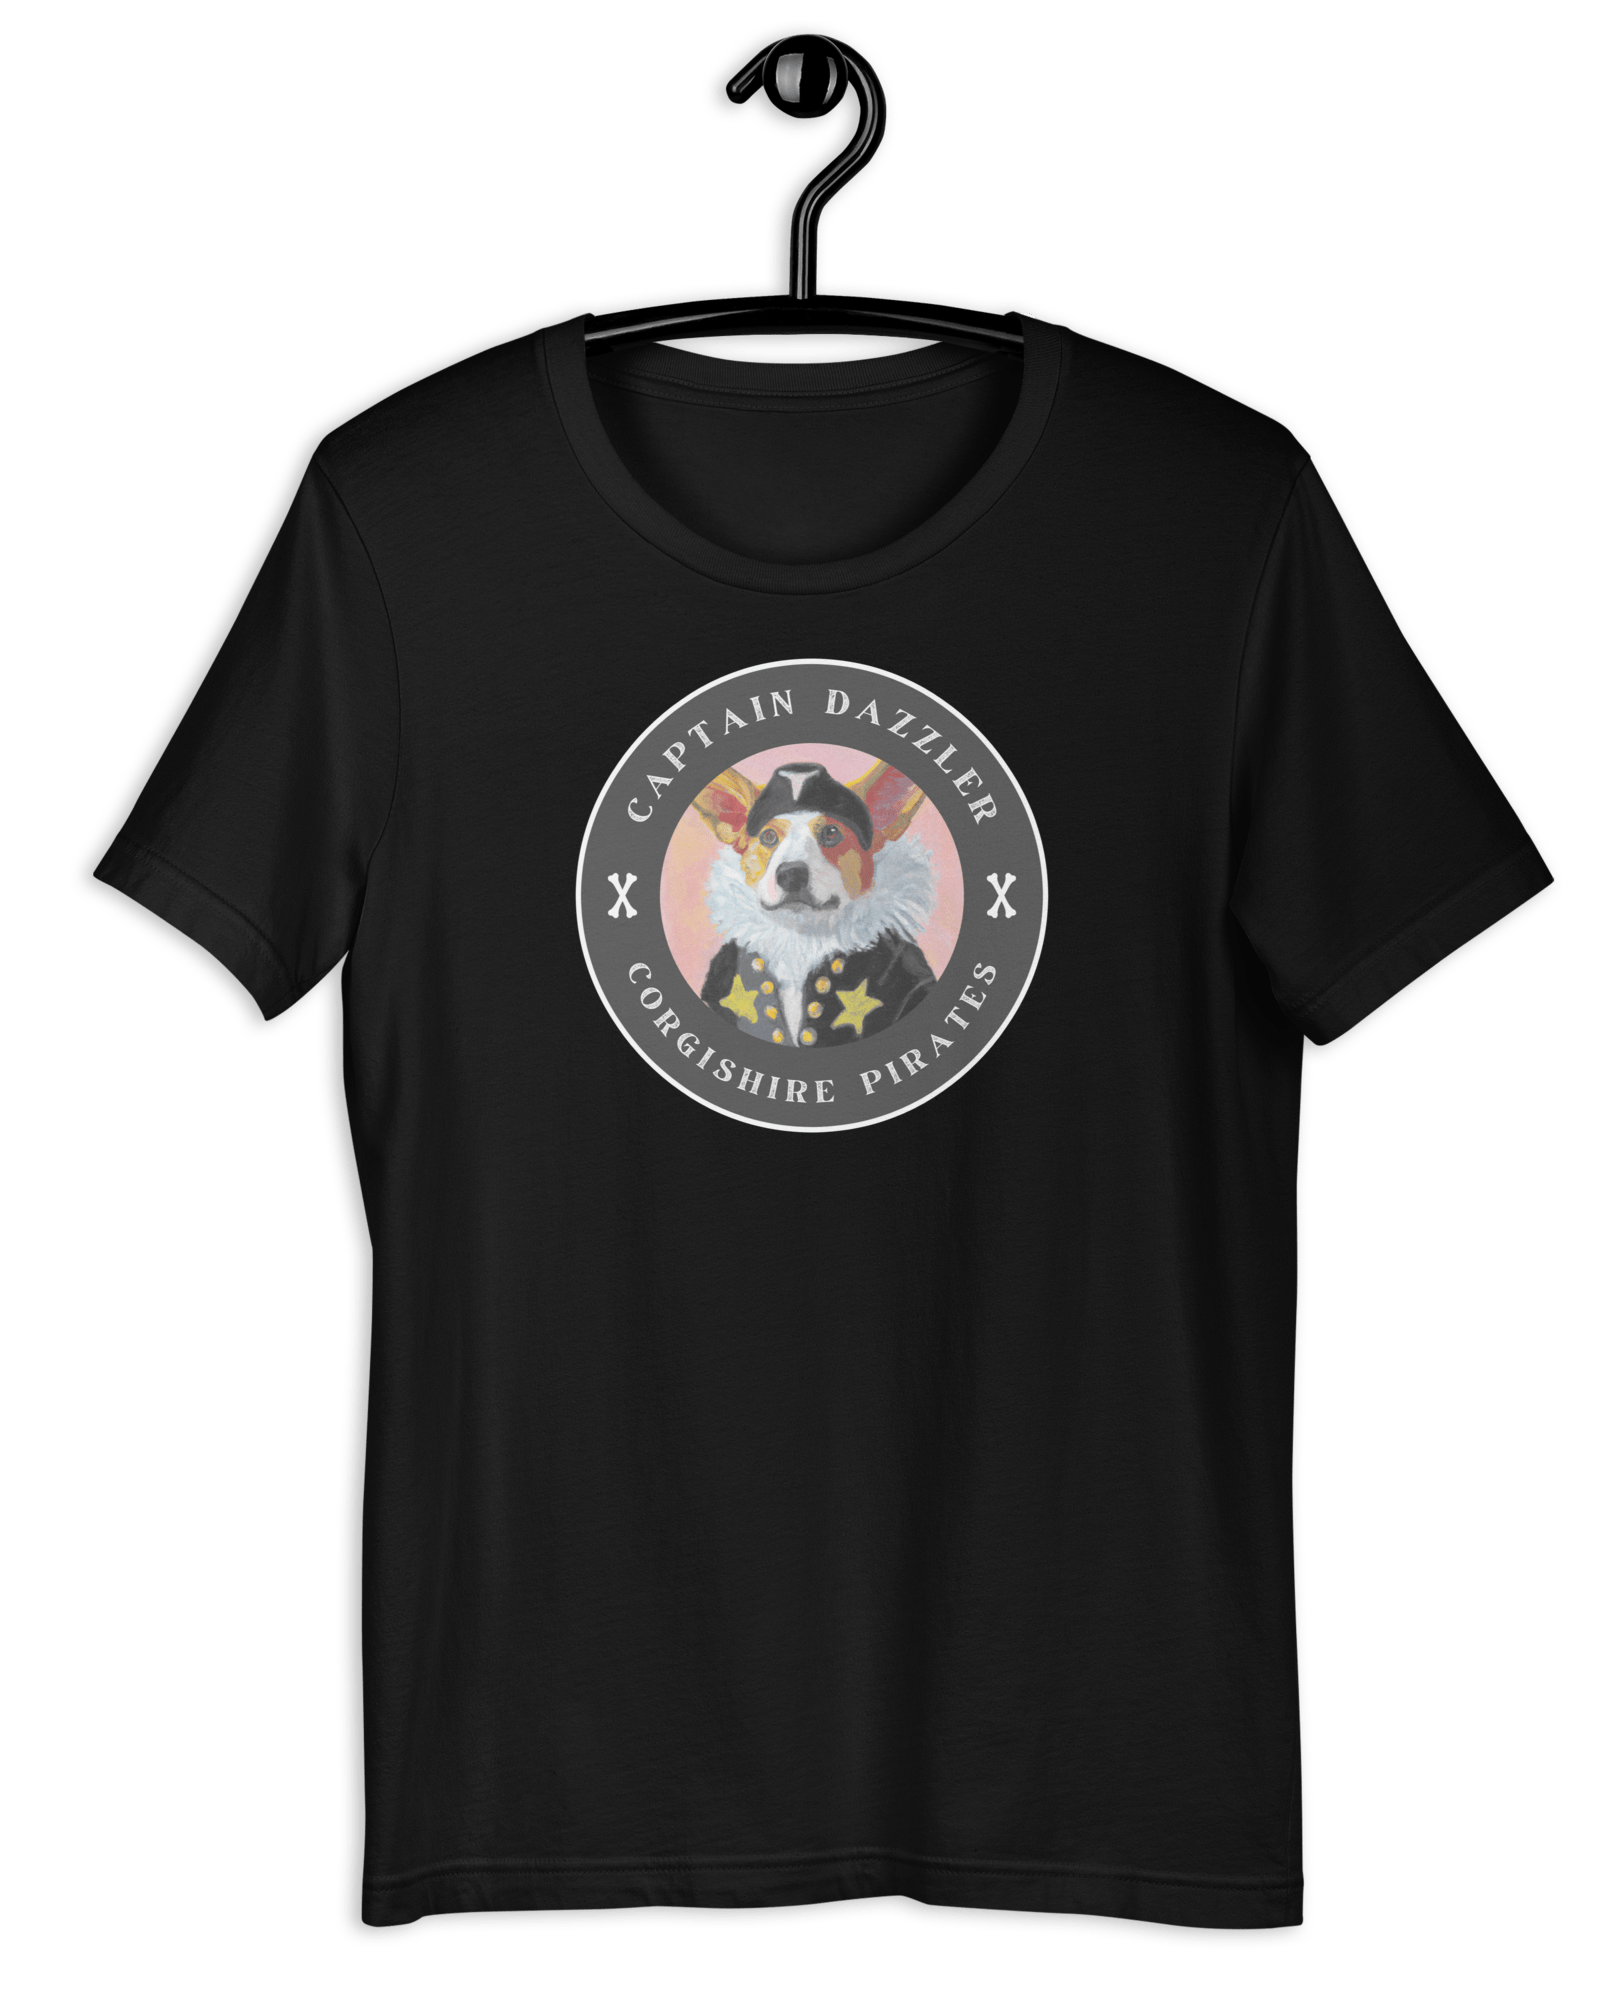 Captain Dazzler Corgishire Pirates T-shirt Black / S Shirts & Tops Jolly & Goode